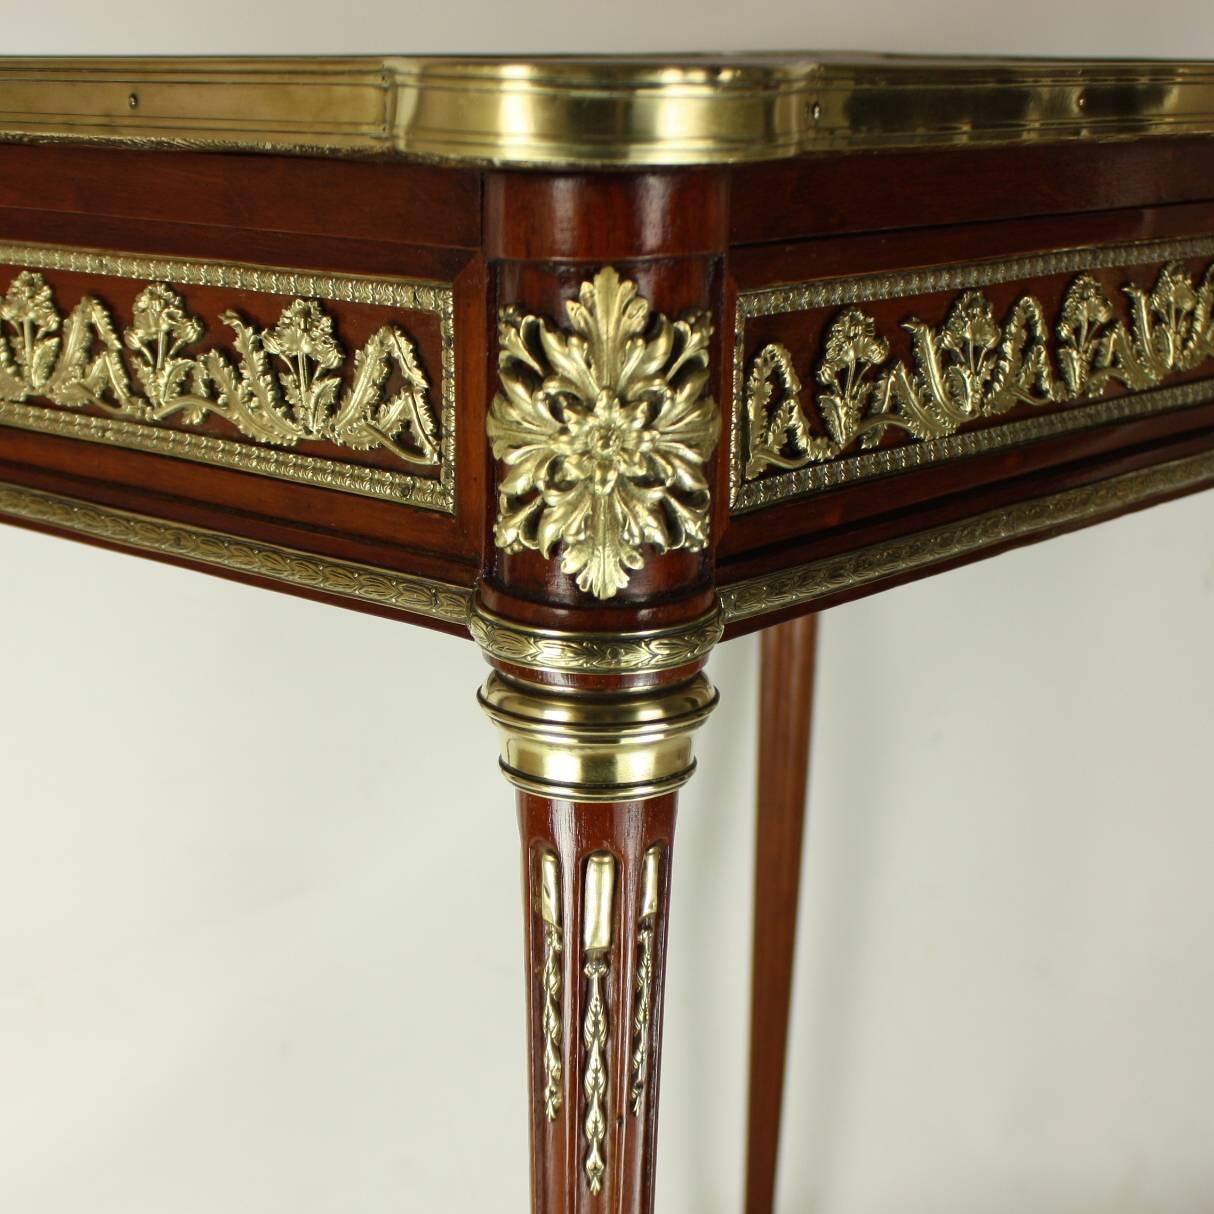 Rare Small Louis XVI Style Mahogany Bureau Plat or Side Table (Messing)